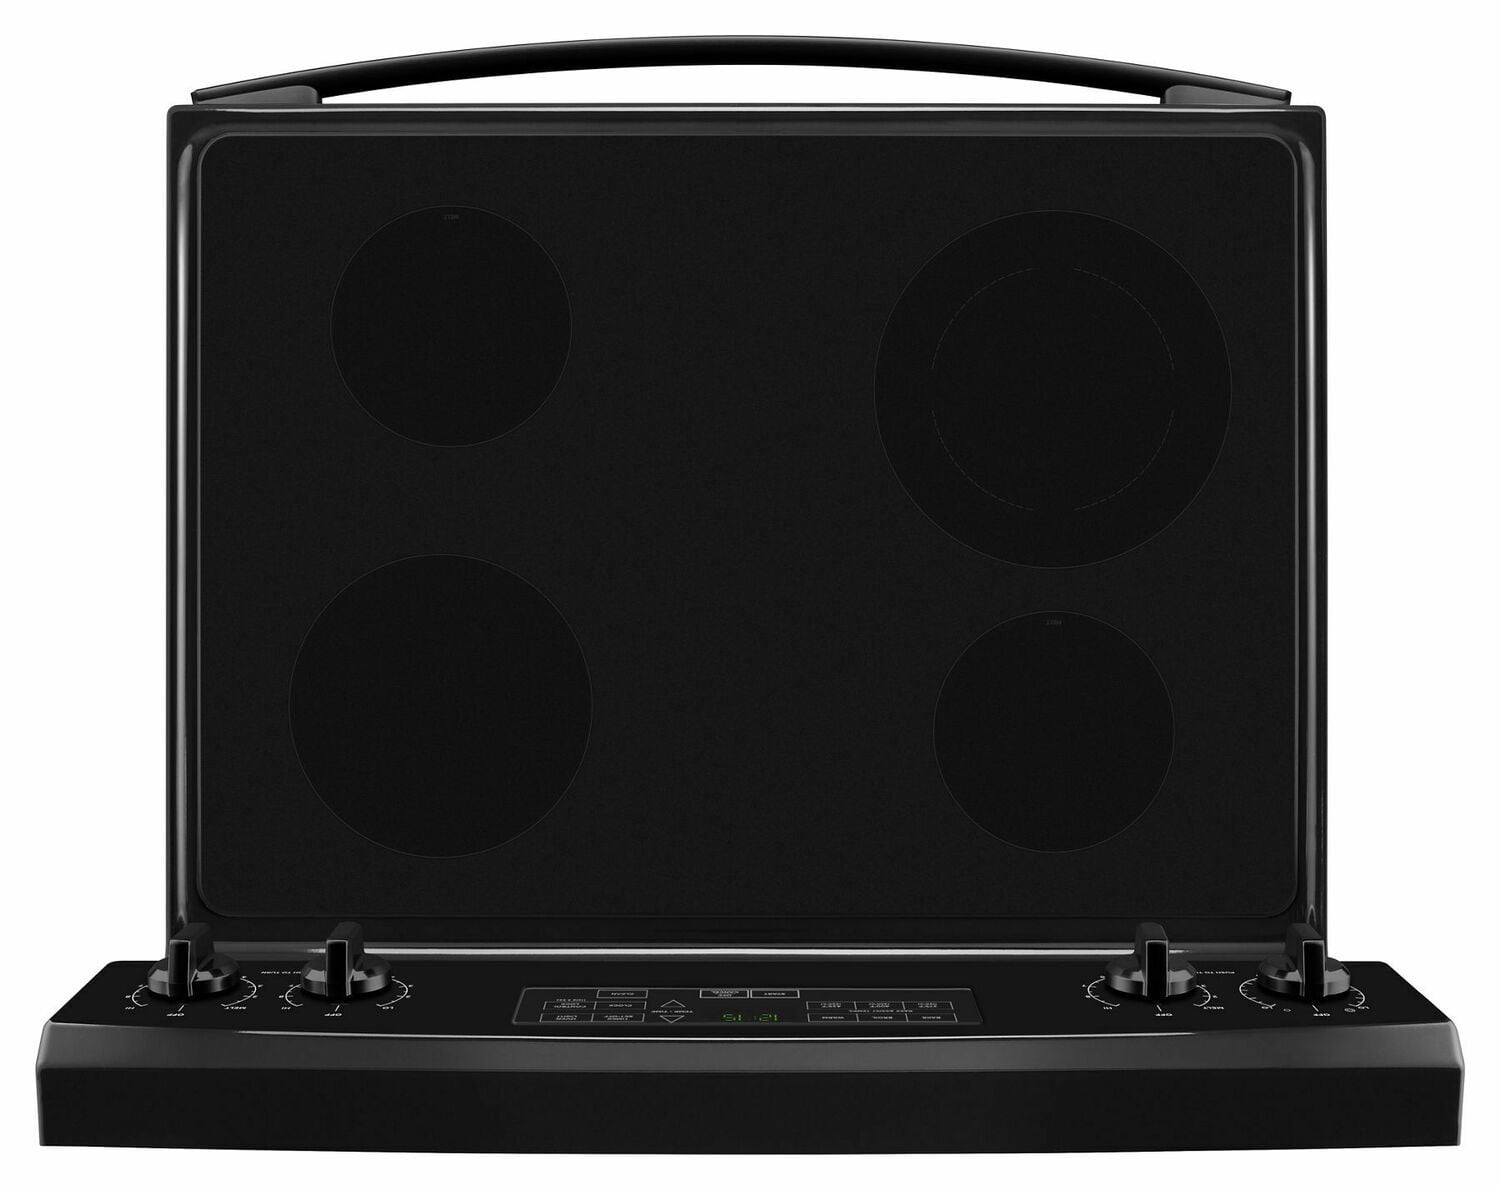 Amana AER6303MFB 30-Inch Electric Range With Extra-Large Oven Window - Black